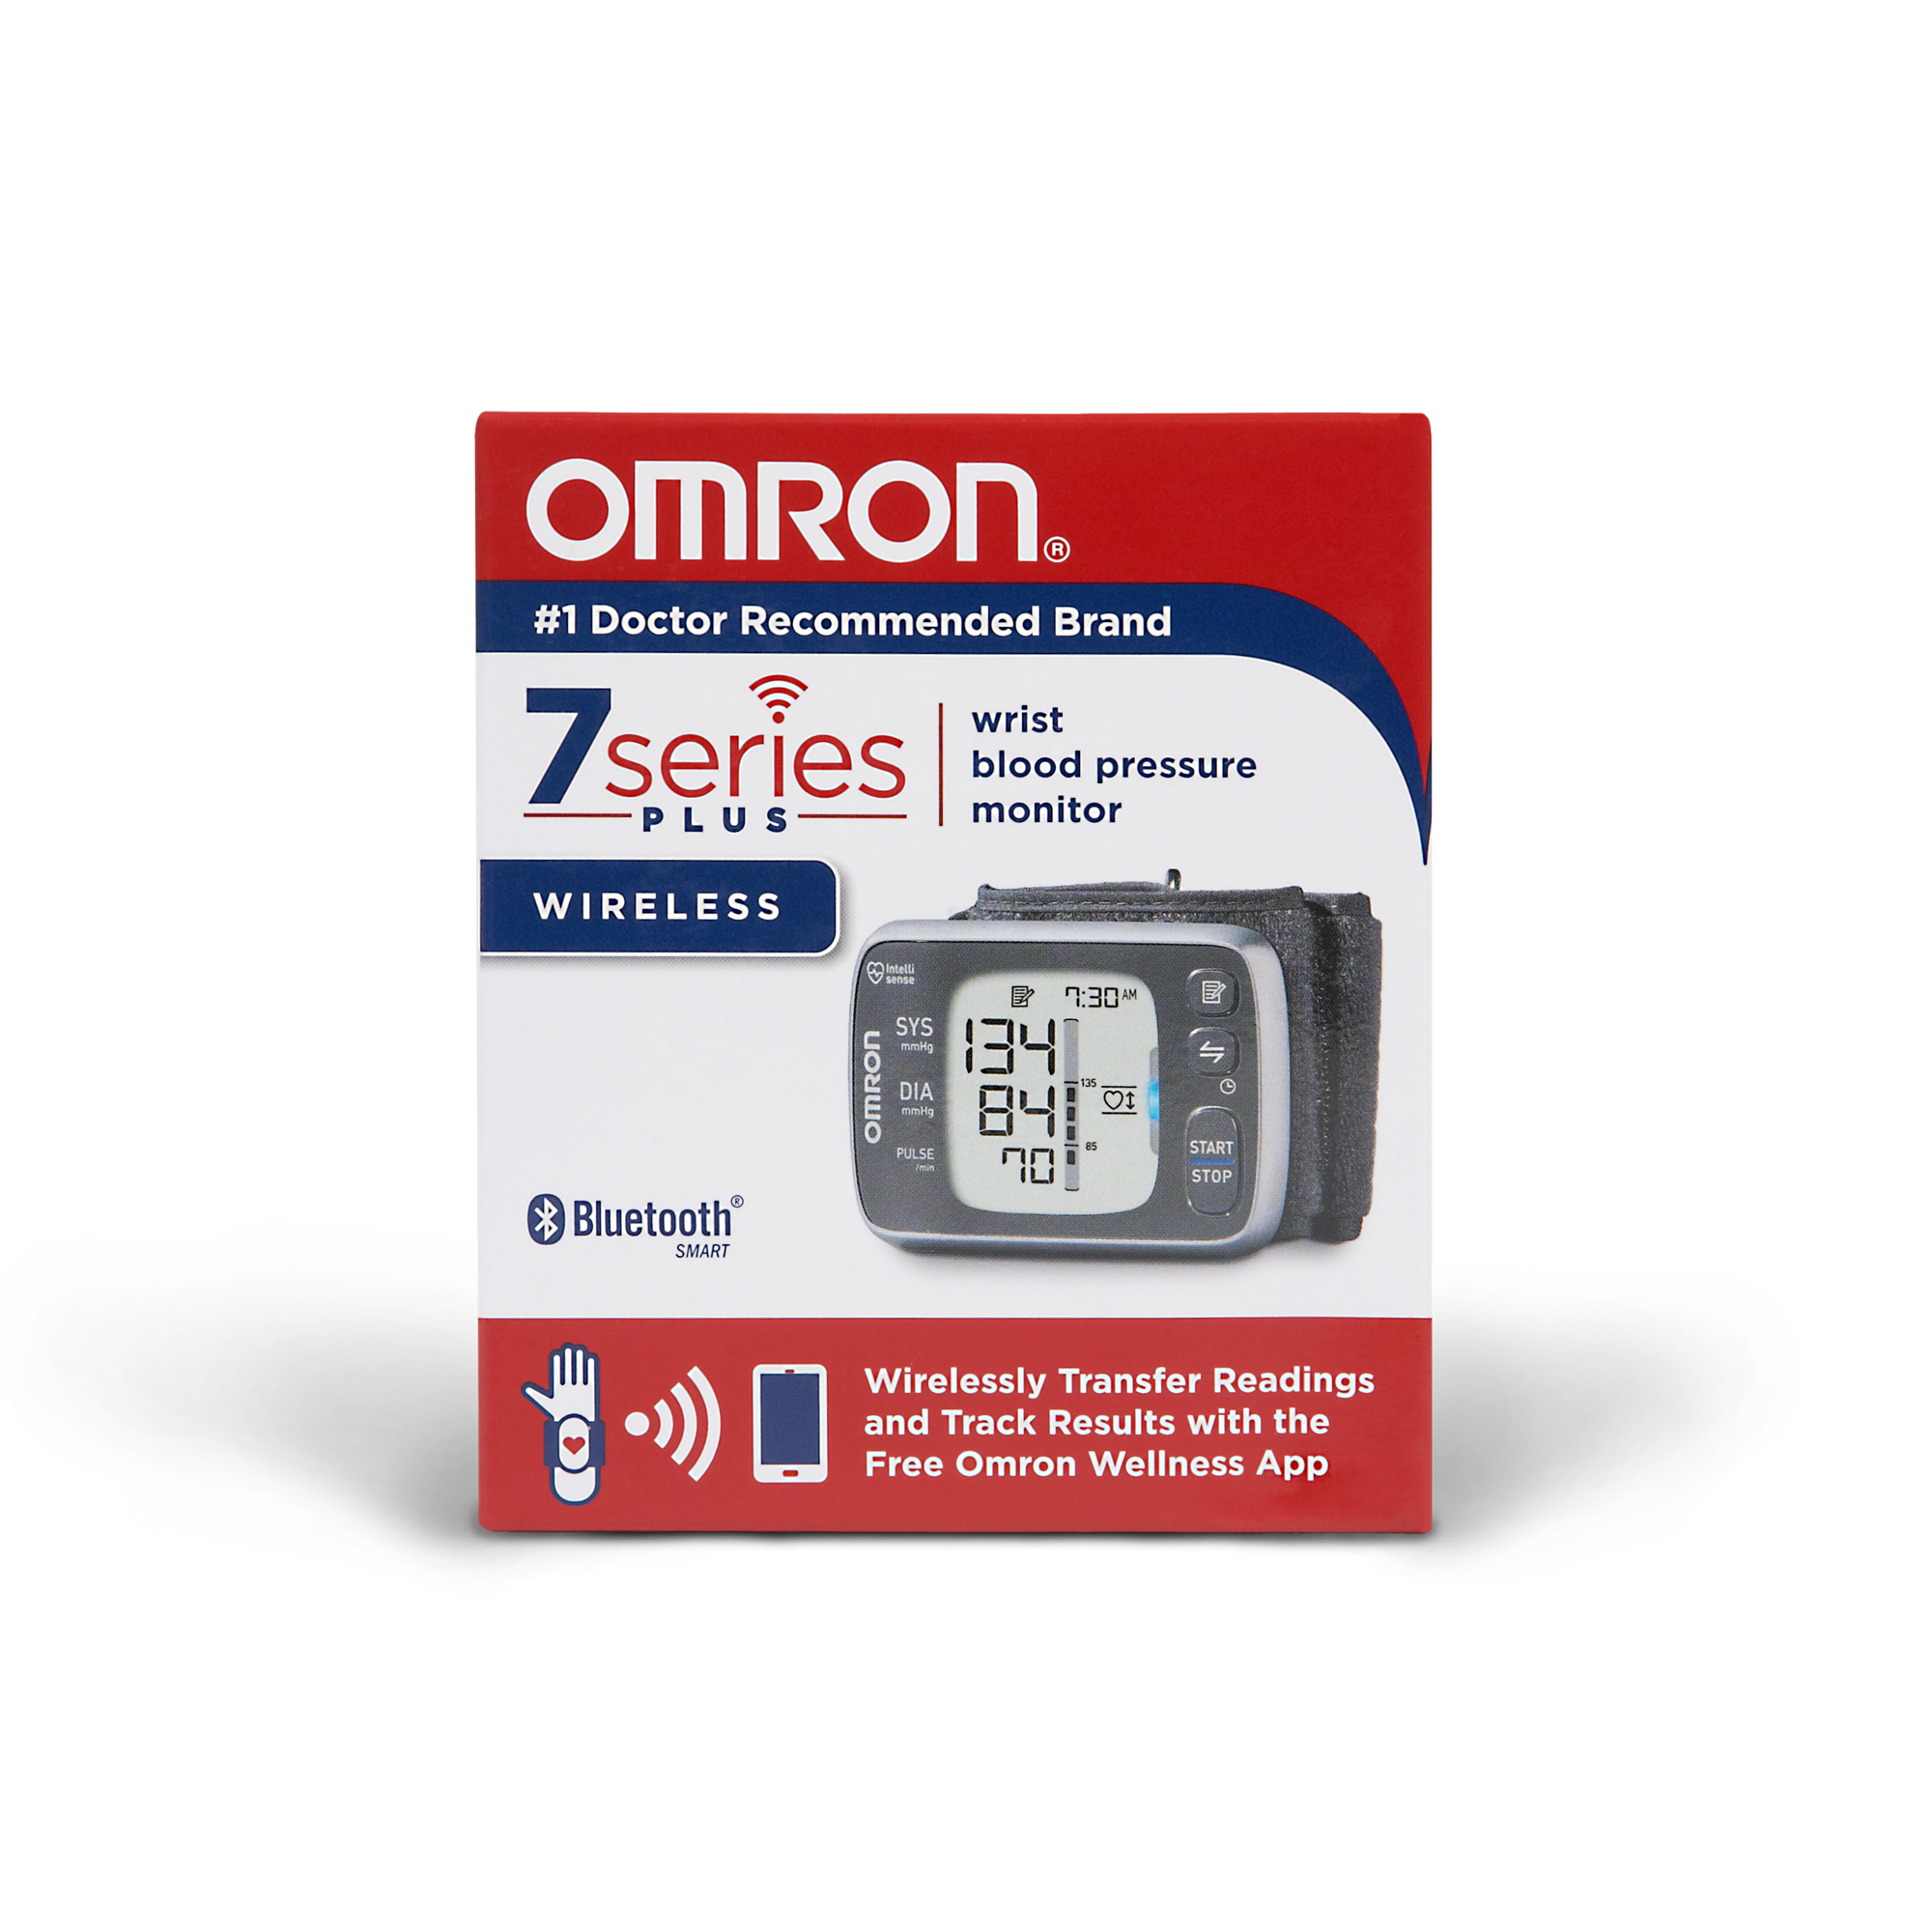 7 Series Wireless Wrist Blood Pressure Monitor view 2